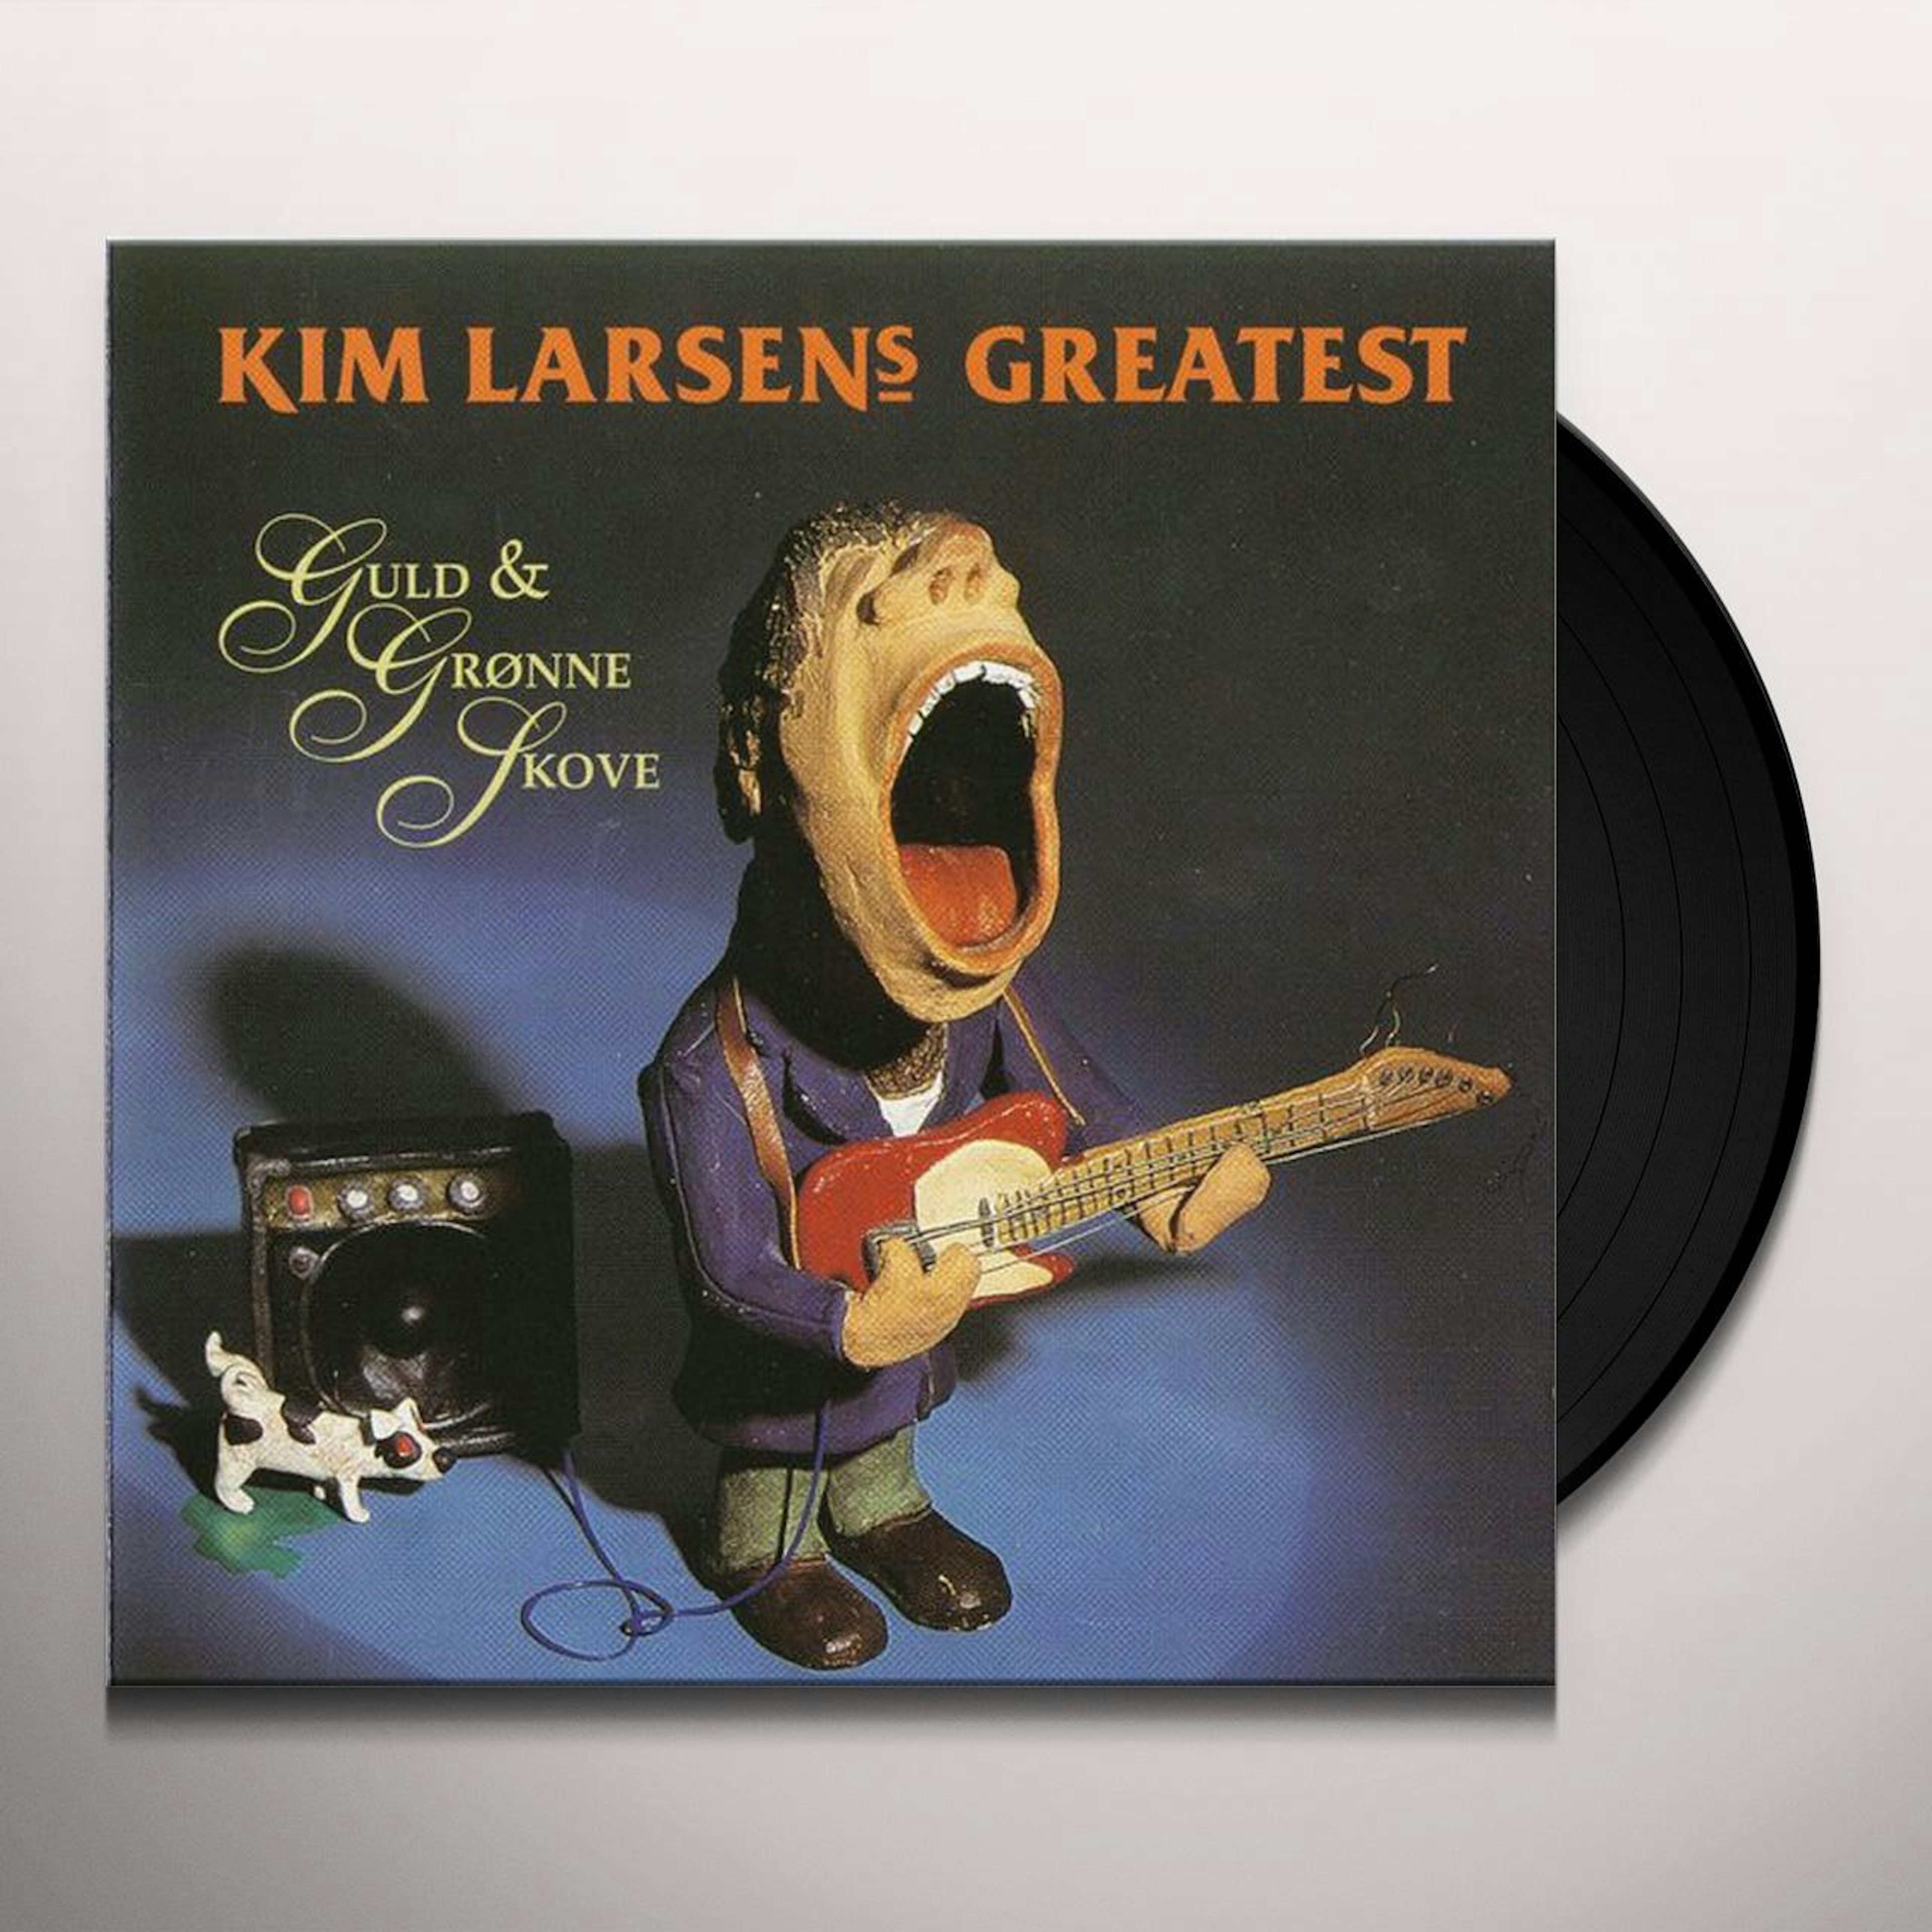 Kim Larsen GULD & GRONNE GREATEST Record